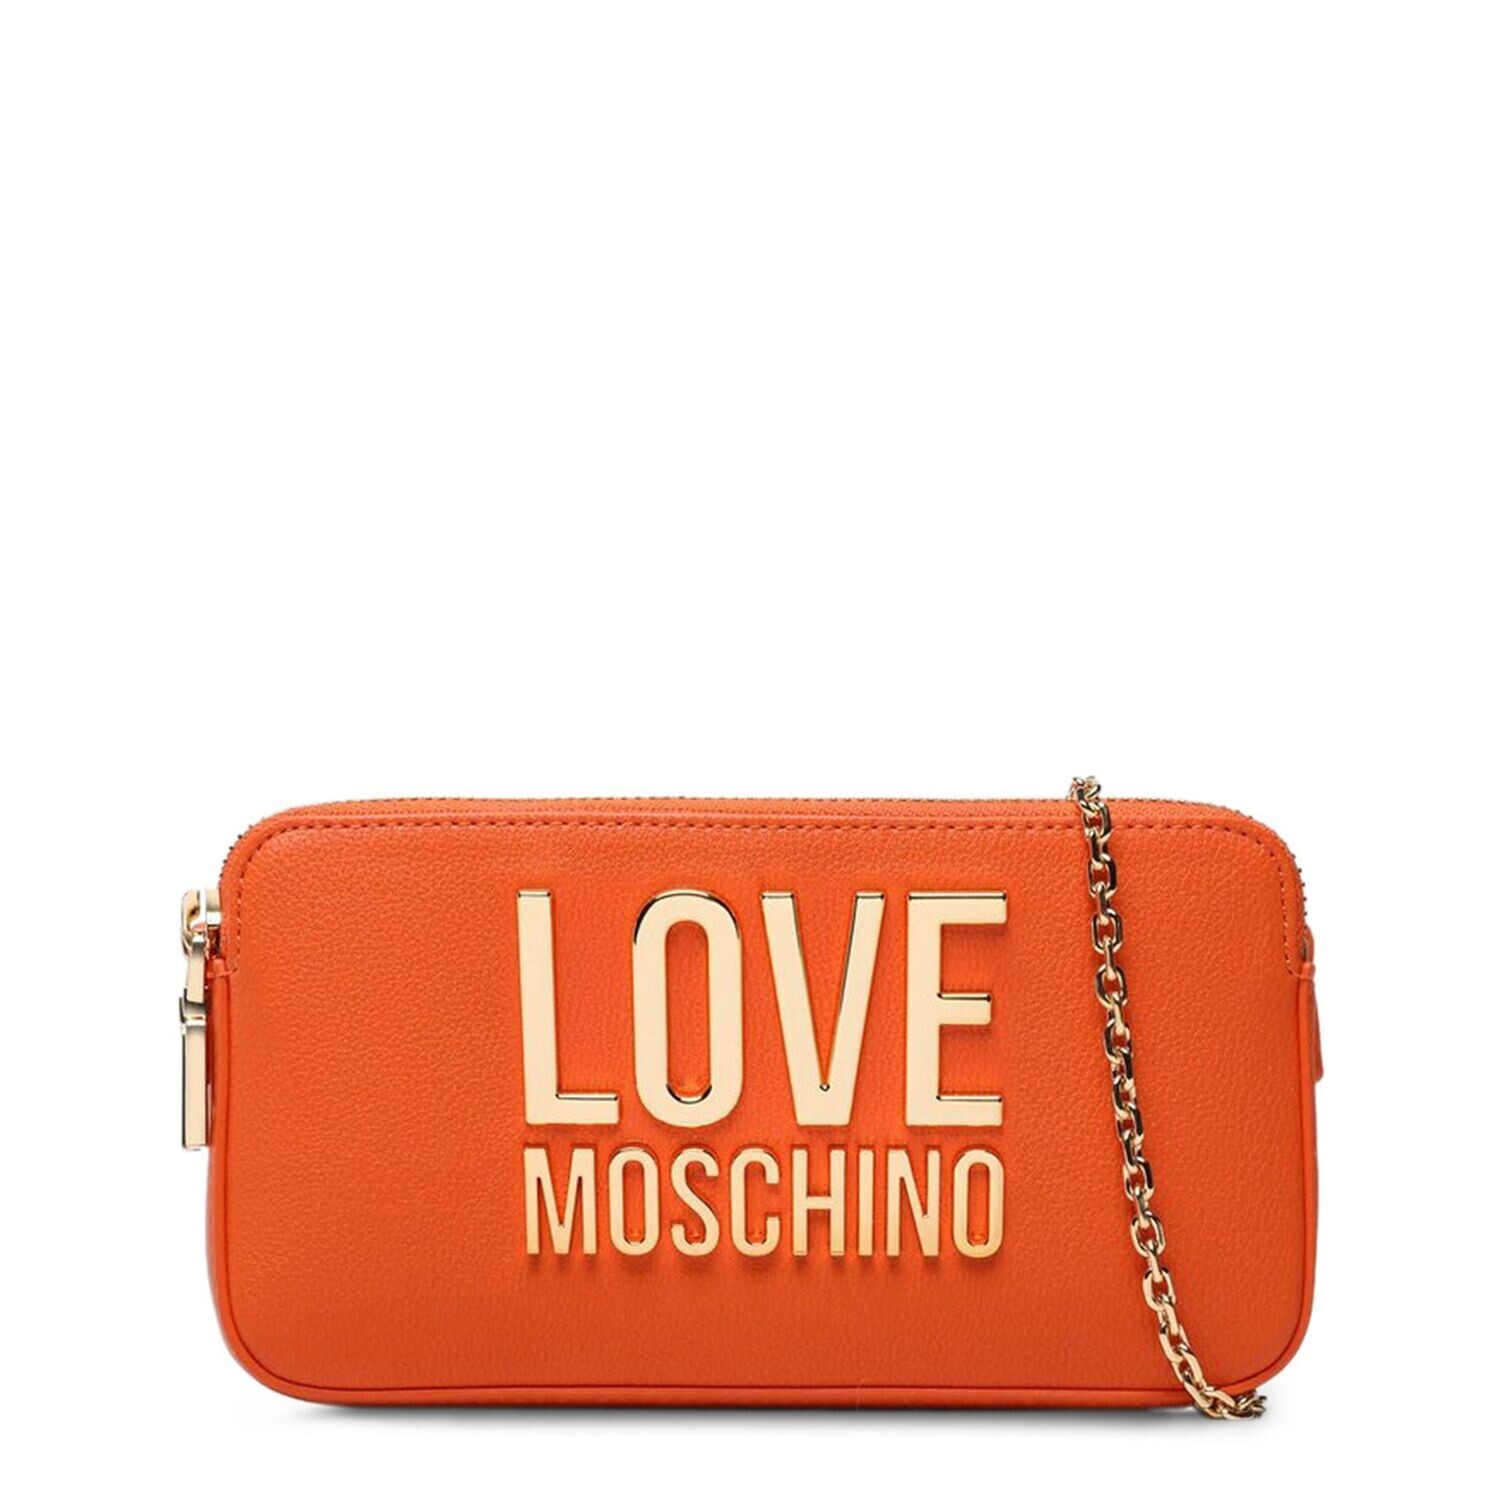 Love Moschino Orange Clutch Bag